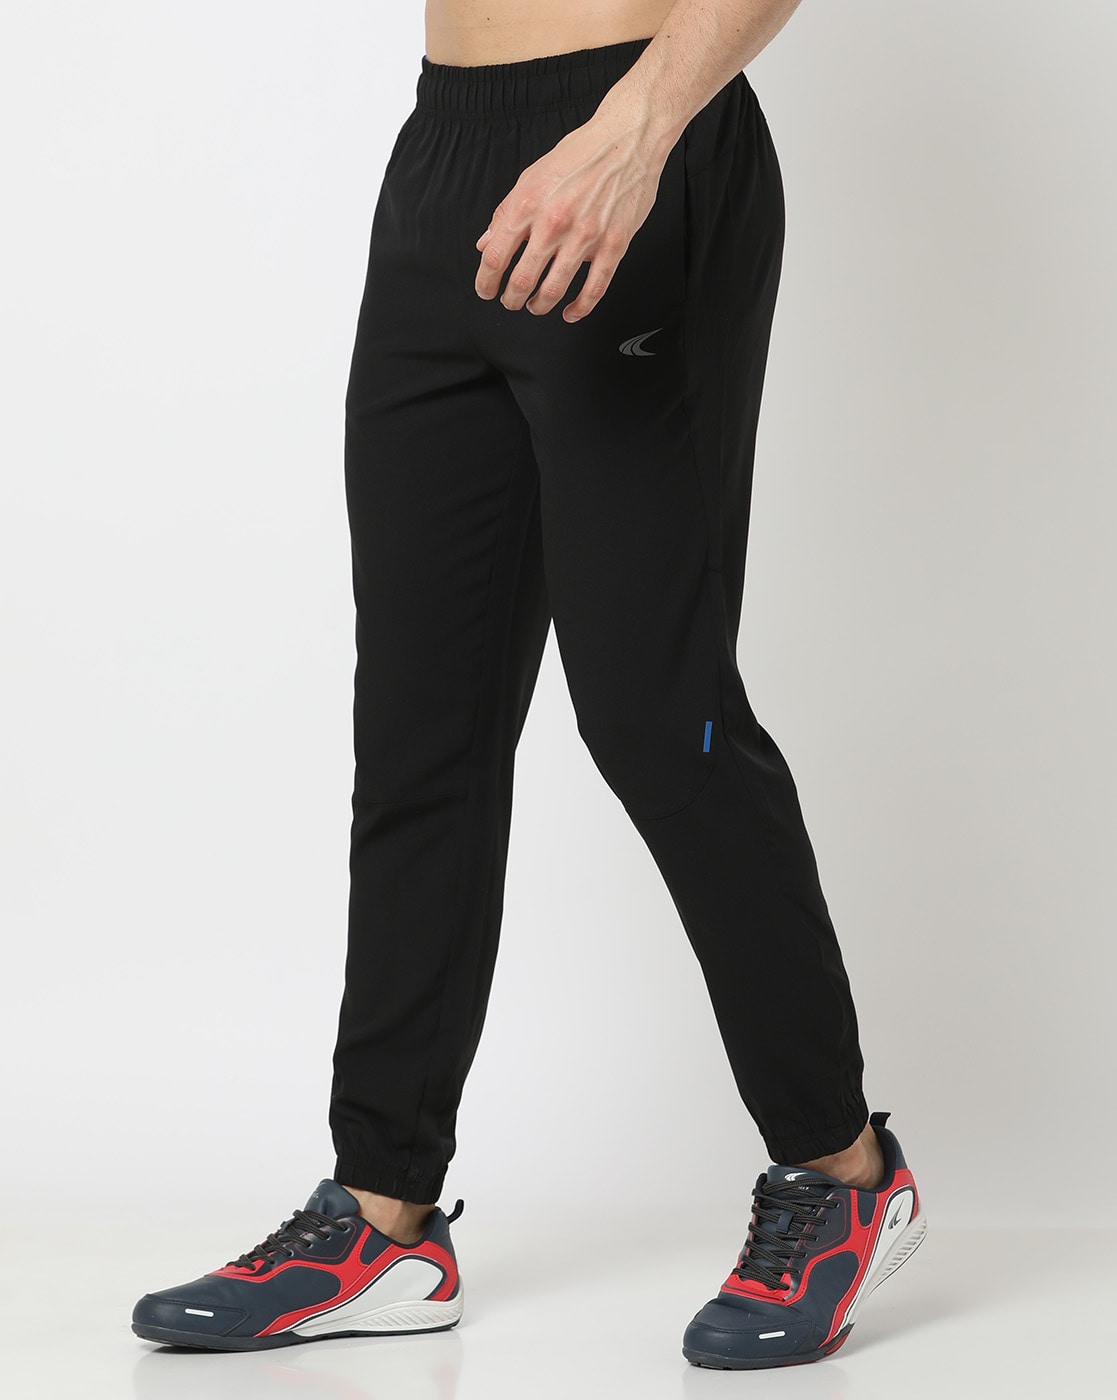 PerforMAX Women's Modern Fit Boot Cut Scrub Pants with 2 Pockets, Size XXS  - 5XL